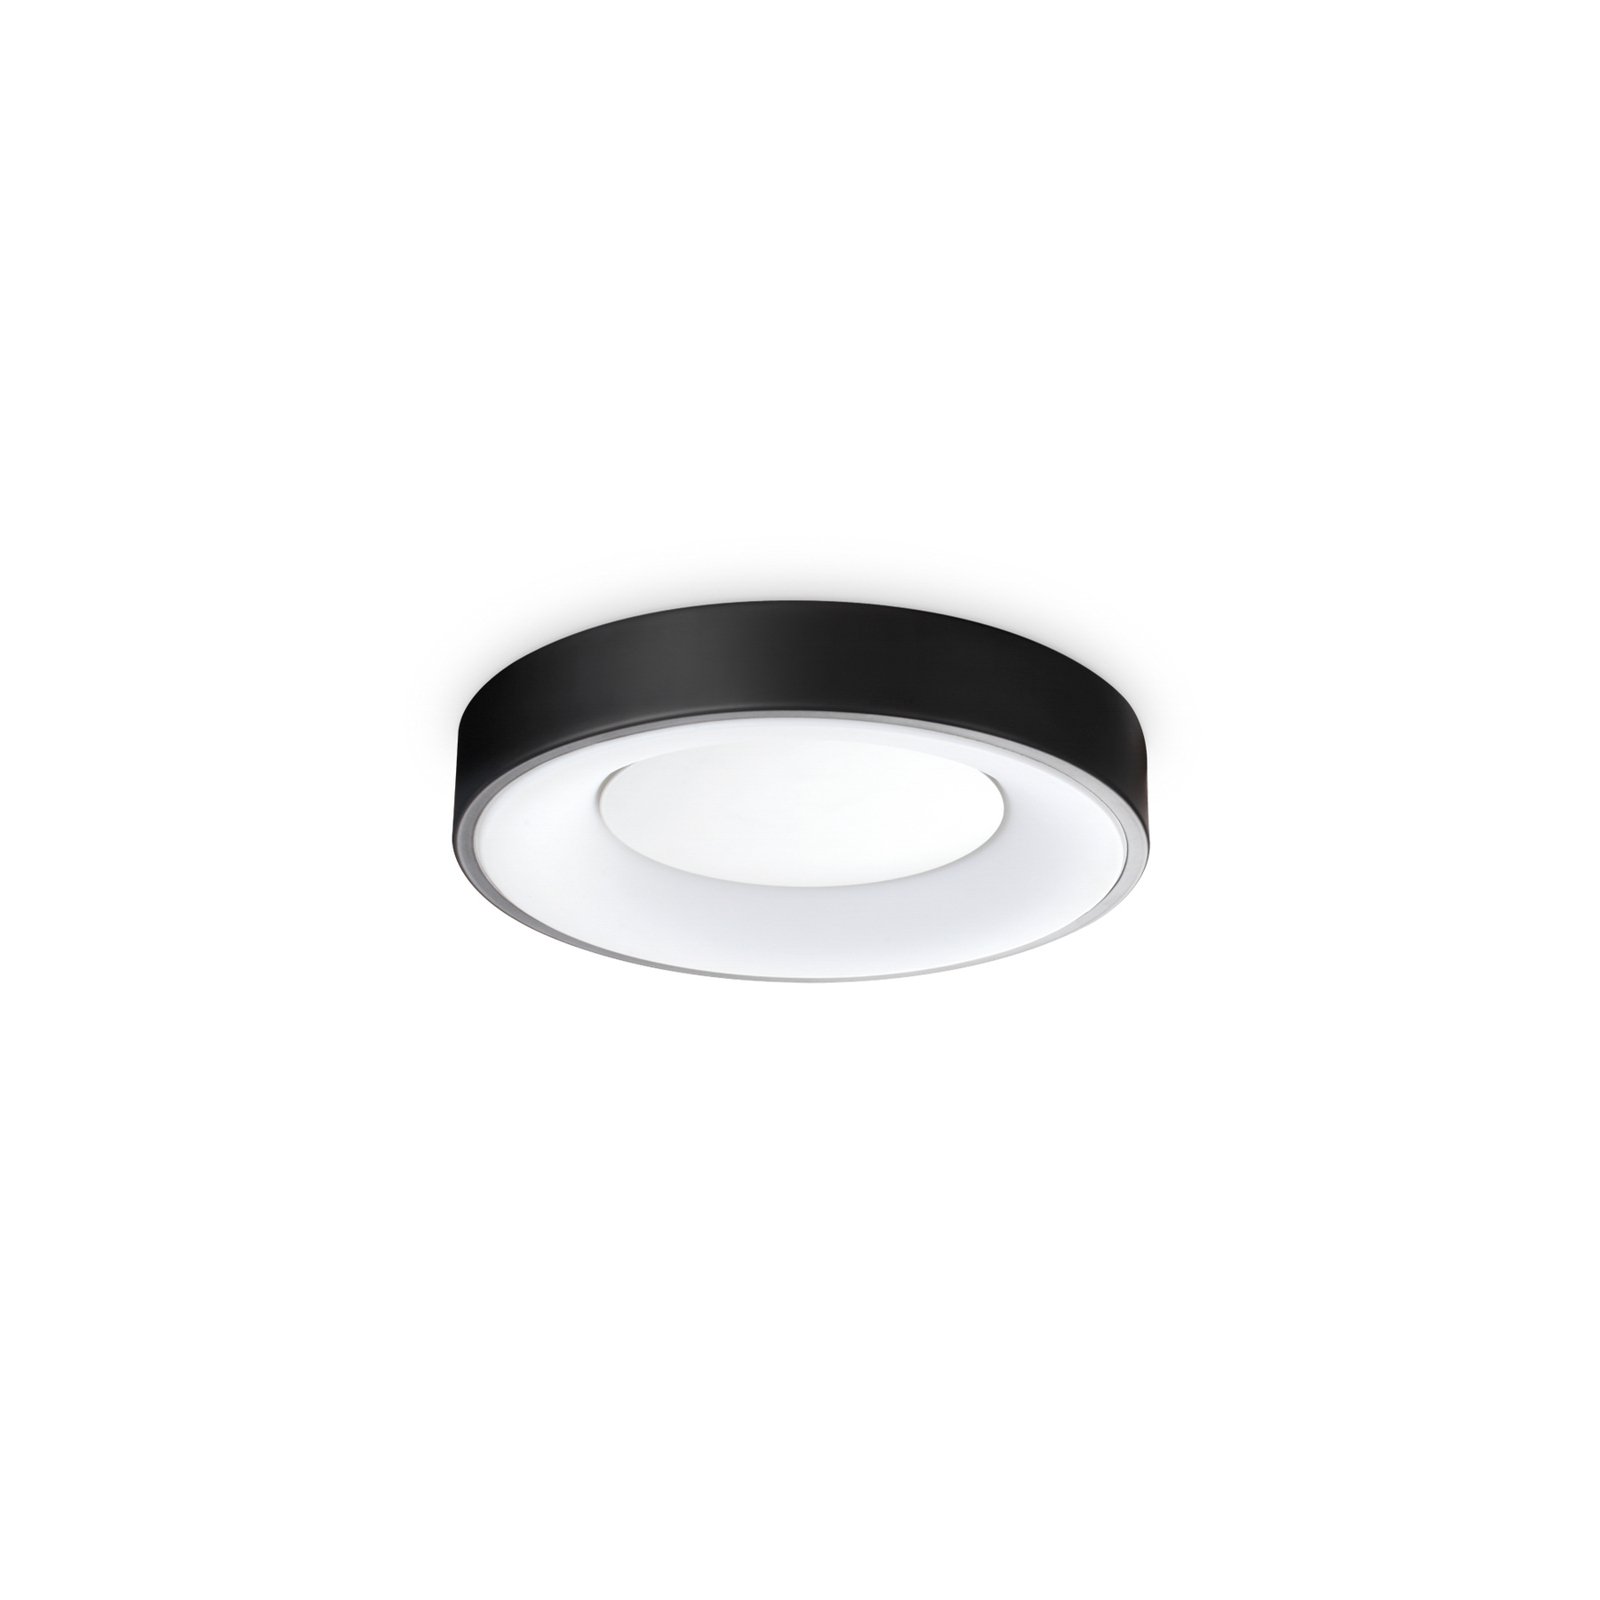 Ideal Lux LED ceiling light Planet, black, Ø 30 cm, metal